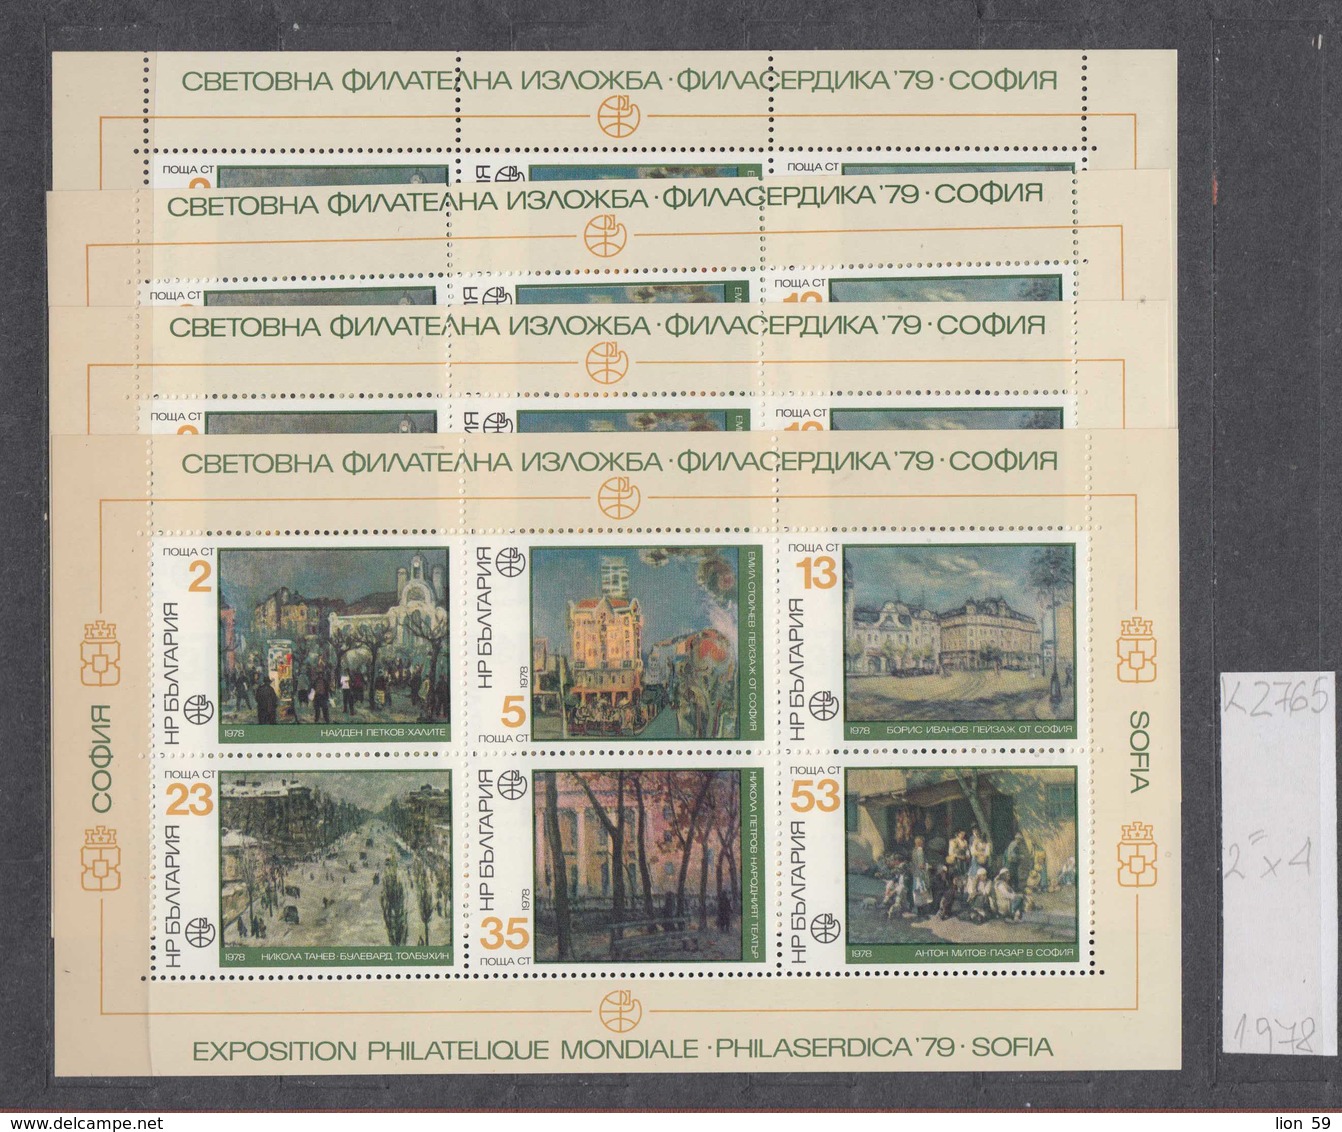 2765 K Bulgaria 1978 PHILASERDICA Views Of Sofia Sheet ** MNH / Internationle Briefmarkenausstellung PHILASERDICA 79 - Ongebruikt